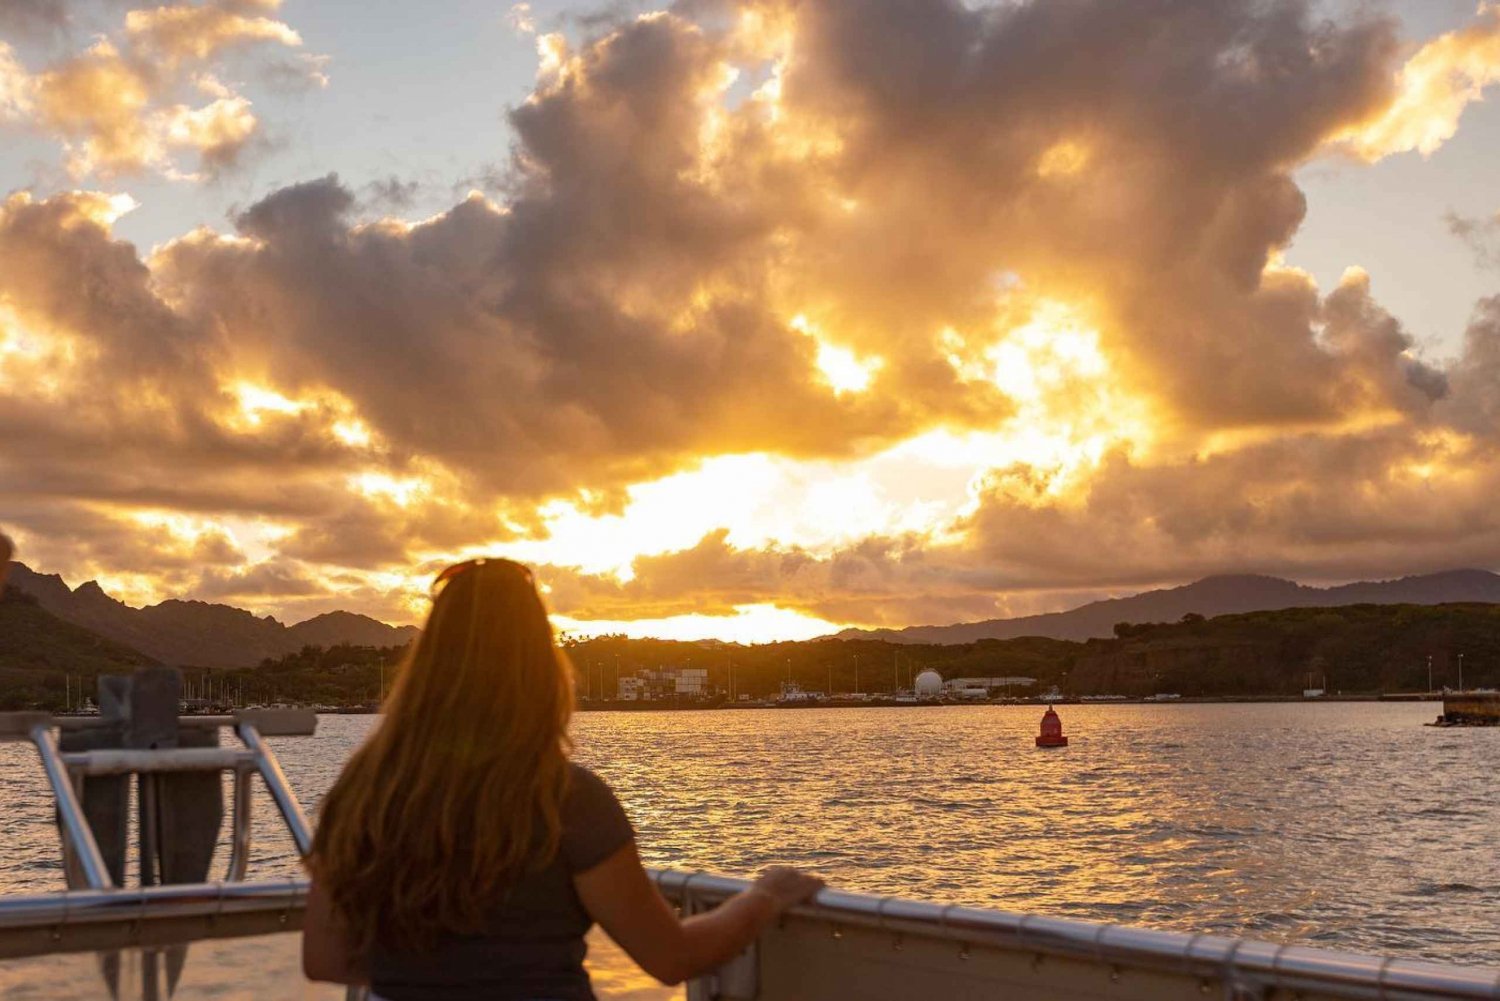 Kauai: Rejs katamaranem o zachodzie słońca